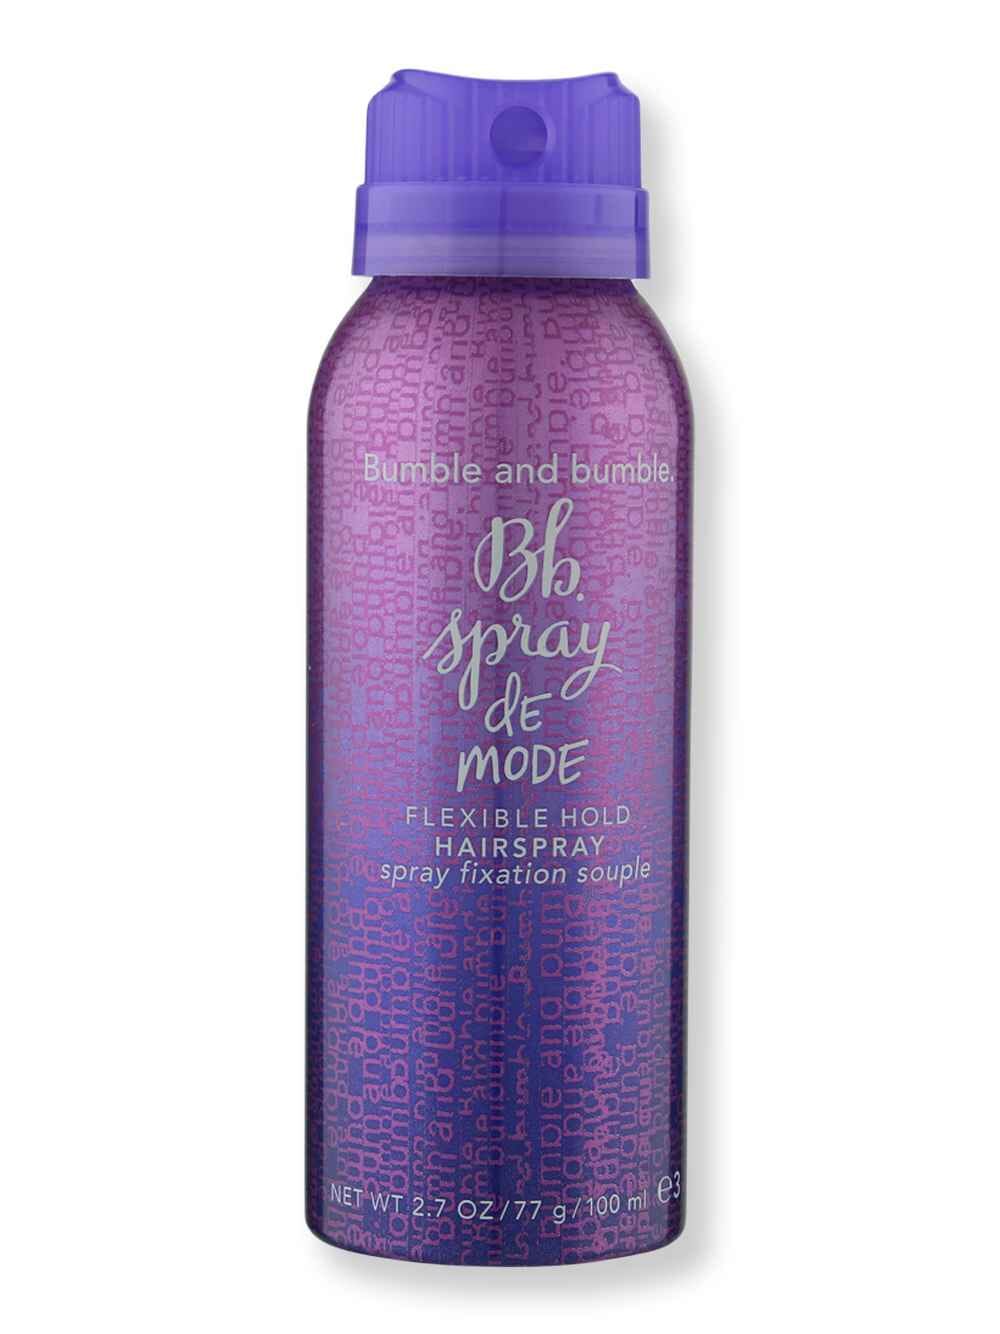 Bumble and bumble Bumble and bumble Spray de Mode Hairspray 2.6 oz Hair Sprays 